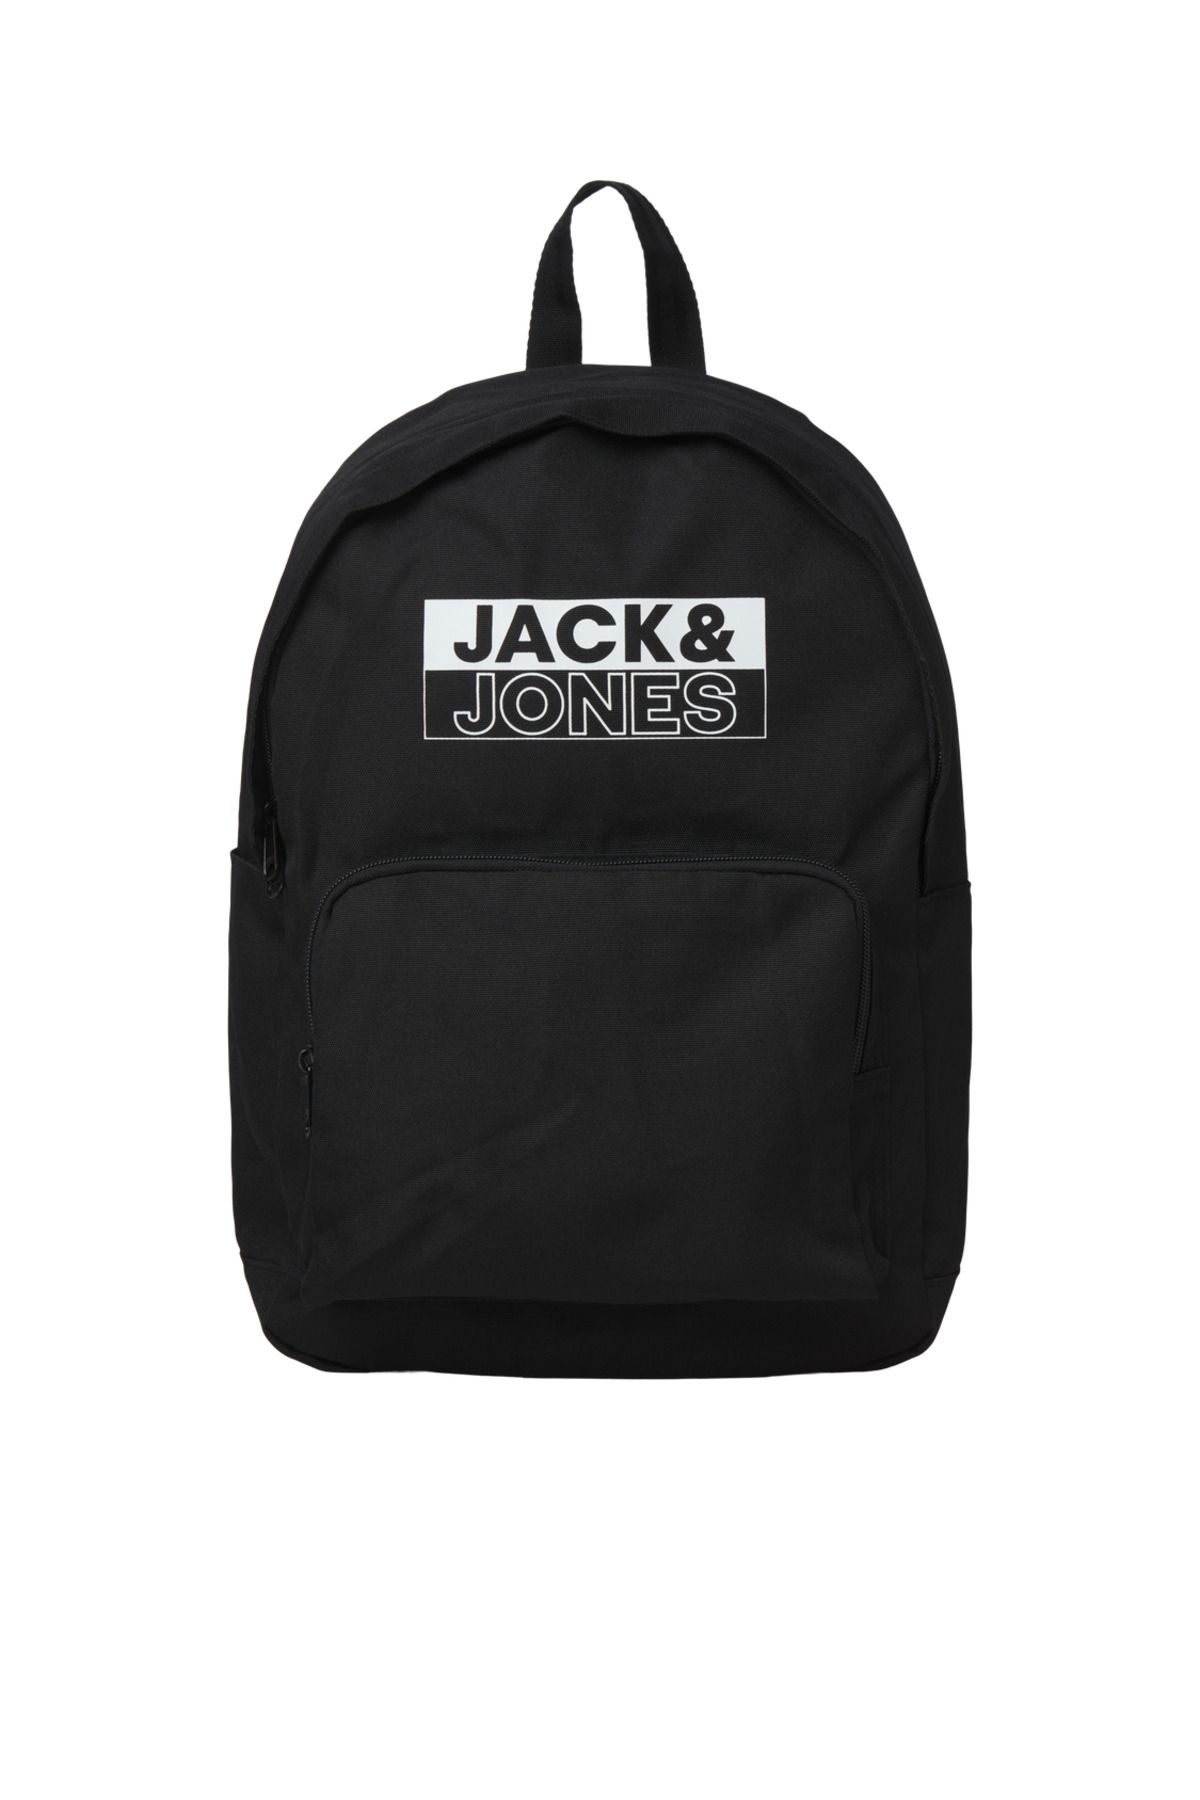 Jack & Jones JACDNA BACKPACK